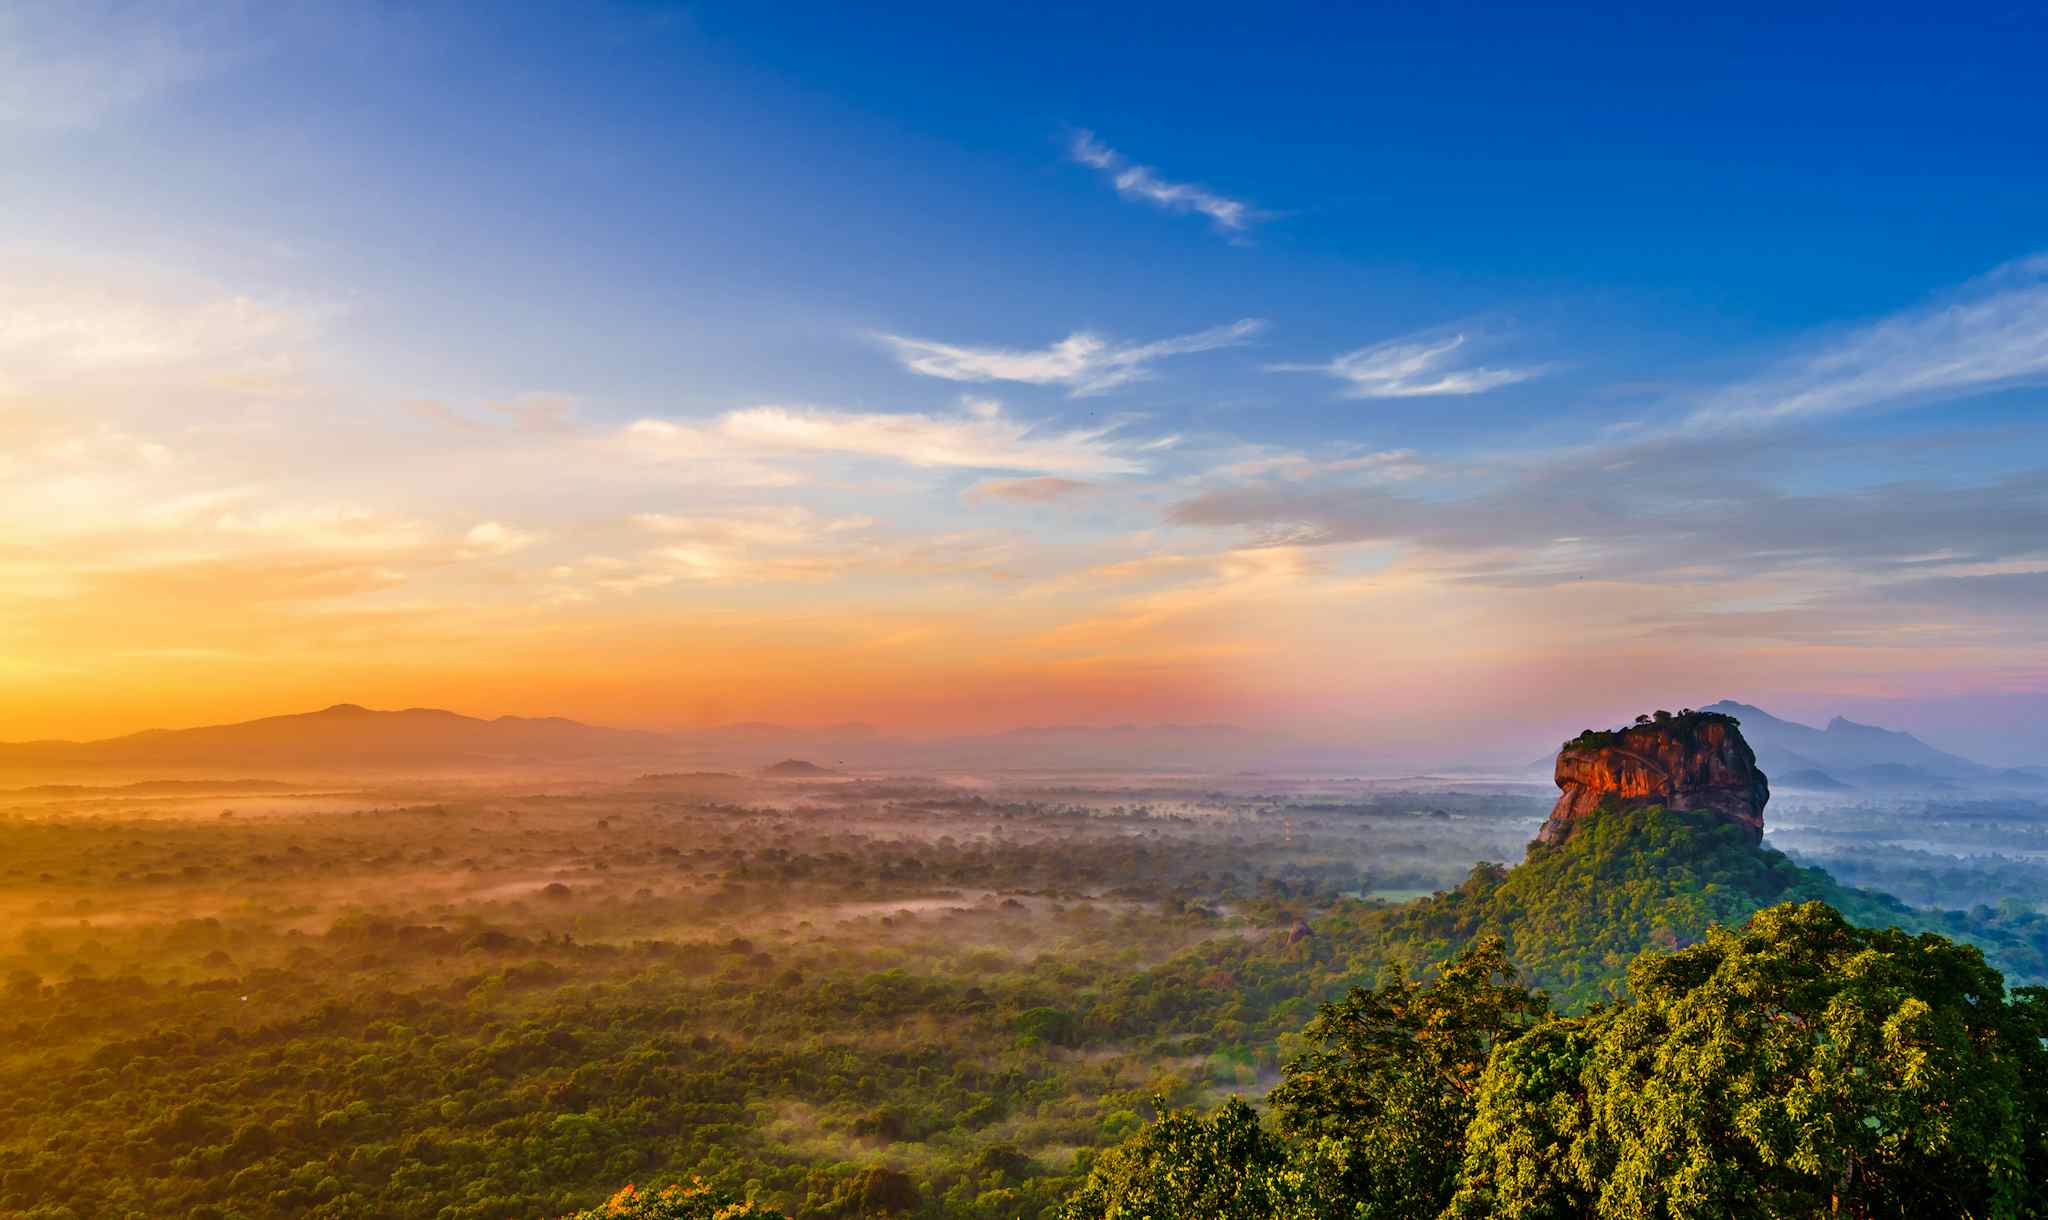 Sunrise view to Sigiriya (Lion Rock) from Pidurangala Rock in Sri Lanka.
